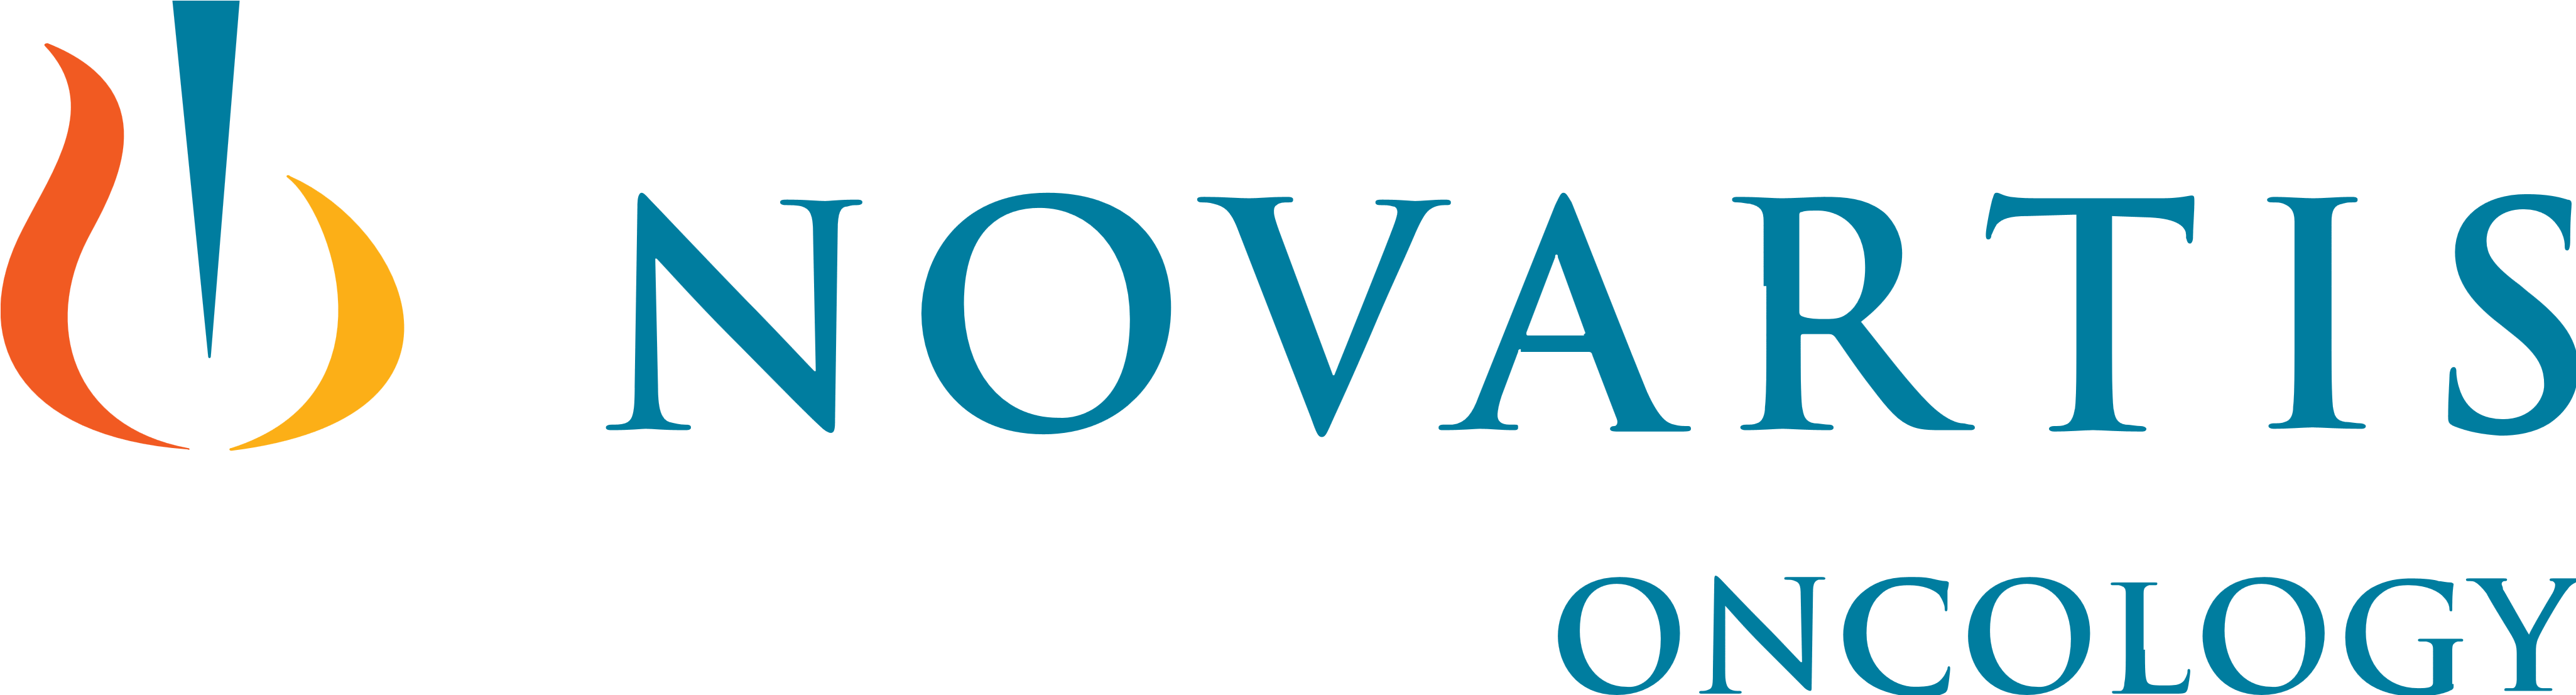 566-5669314_novartis-logo-download-for-free-novartis-oncology-logo